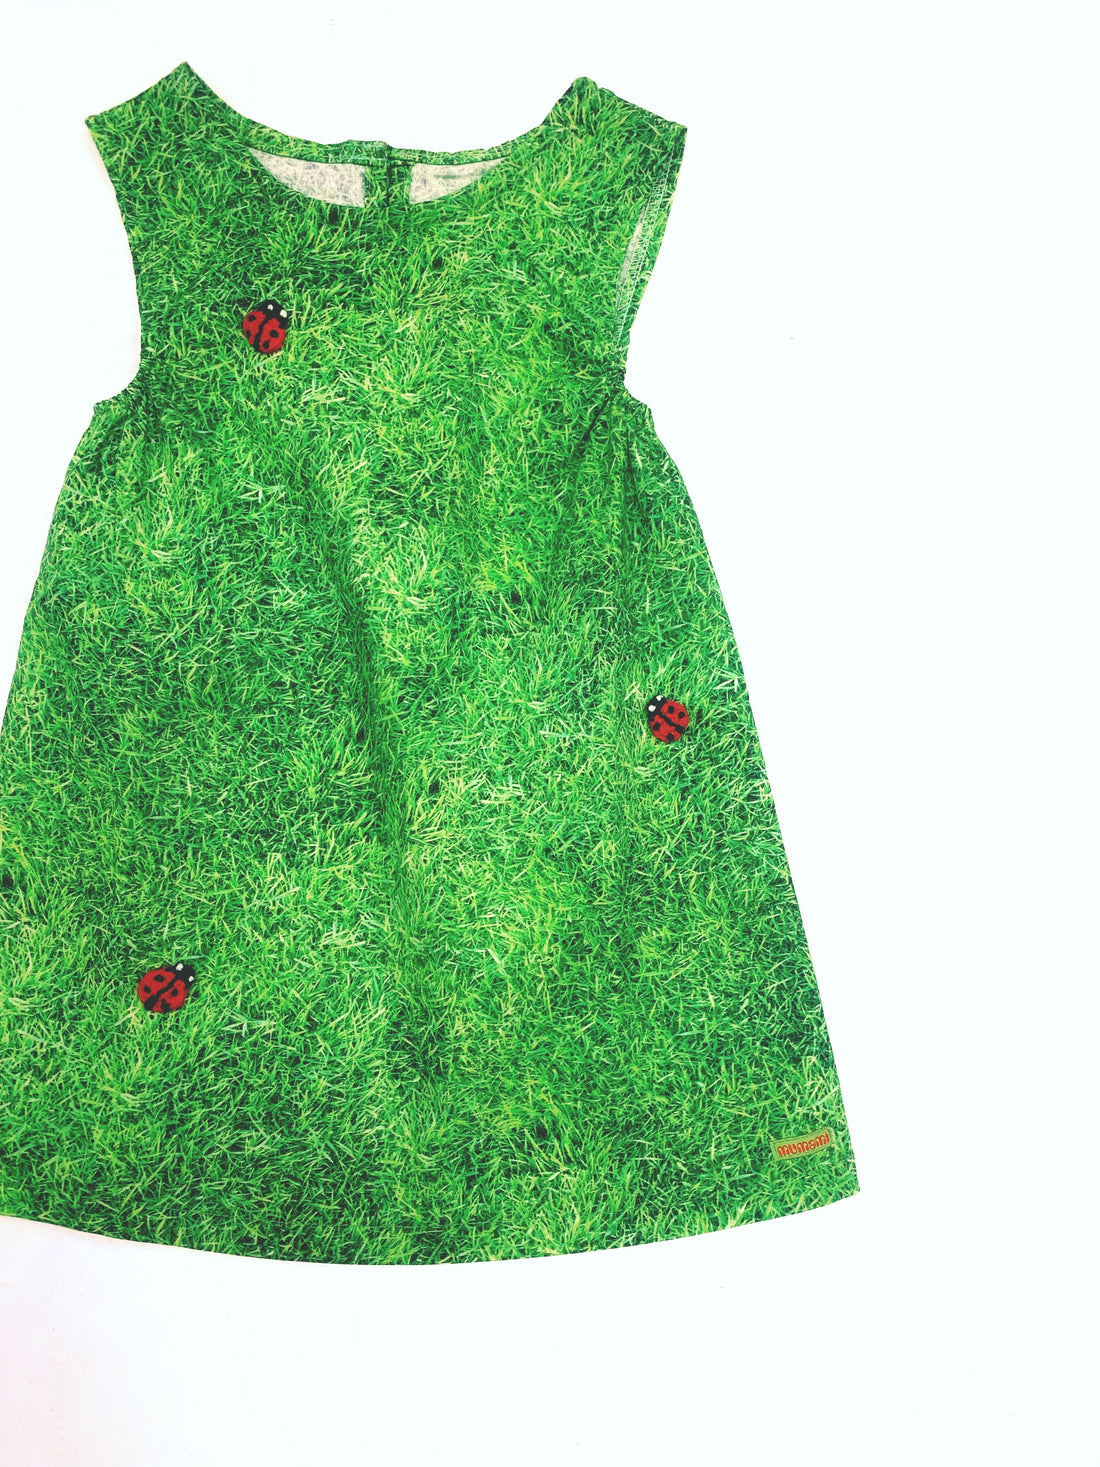 Ladybug Grass Dress